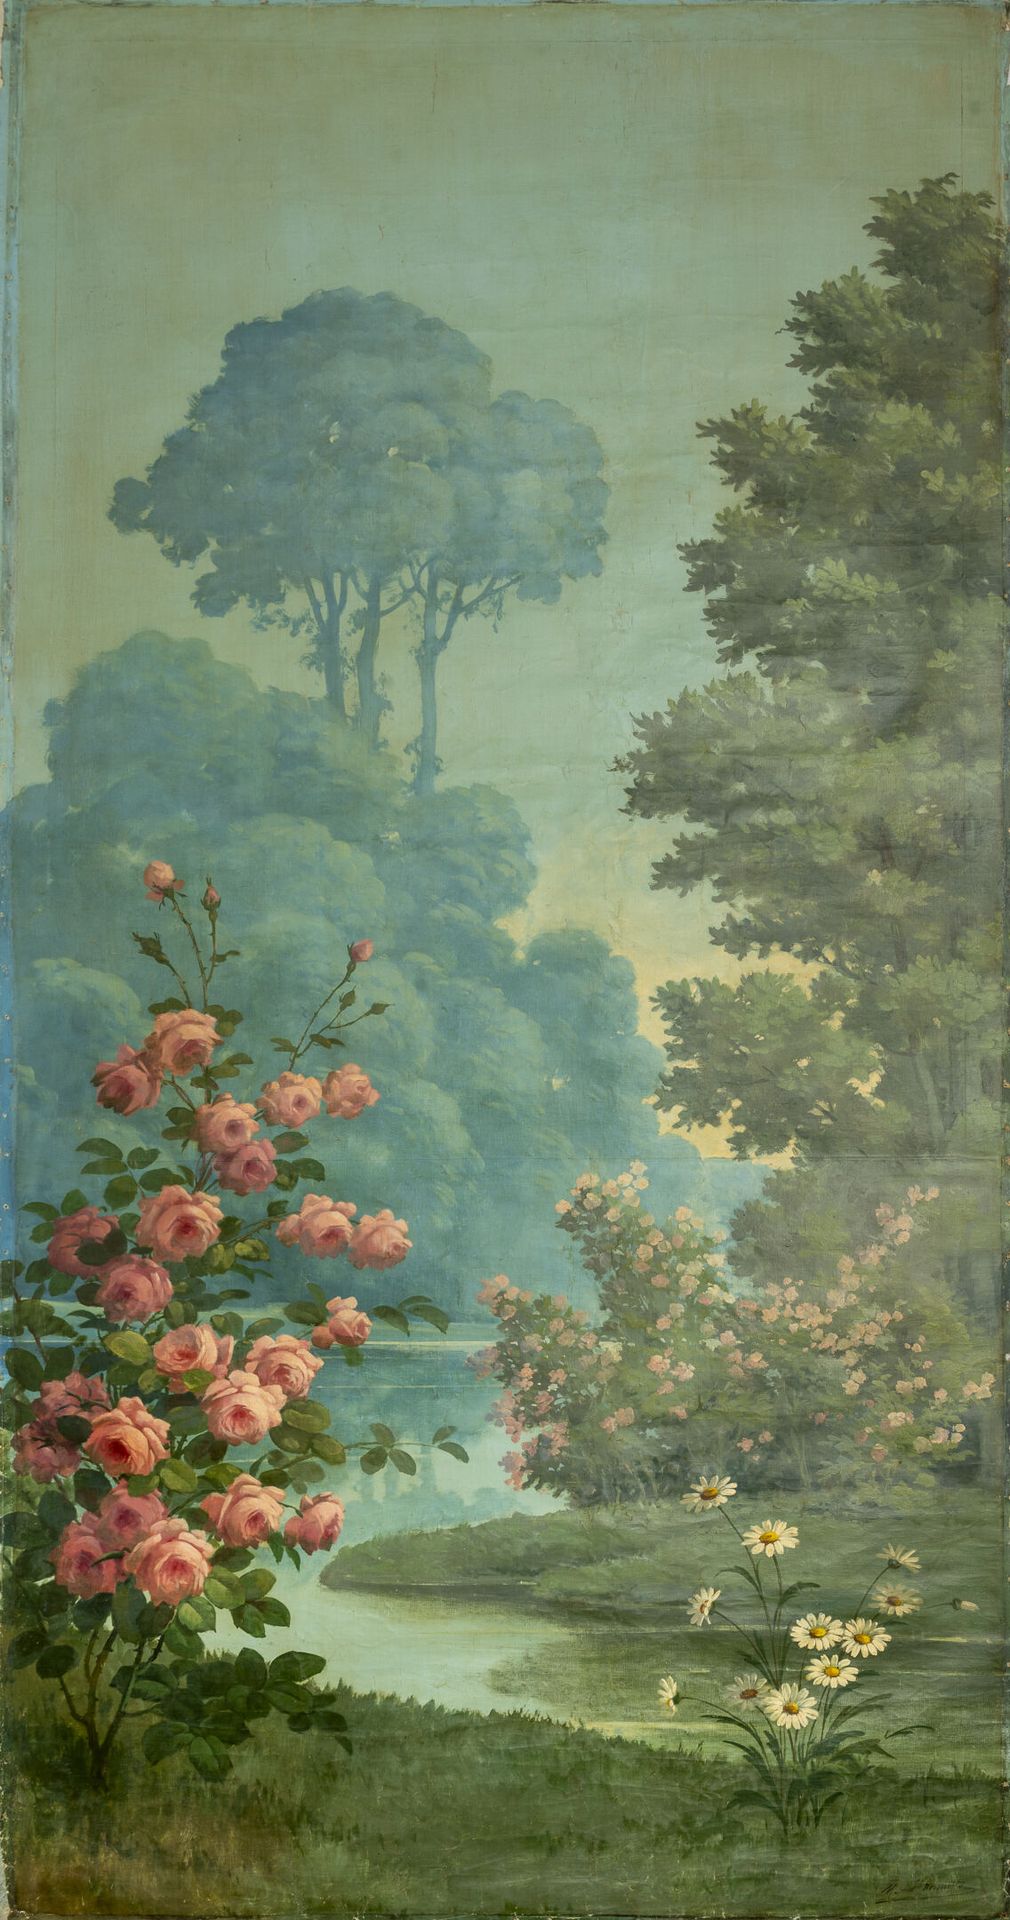 Ecole du XIXème siècle 景观，有一条蜿蜒的溪流和大树，由玫瑰花丛和雏菊组成。

布面油画，无框架。轧制。

右下方有签名 "M. L'HE&hellip;